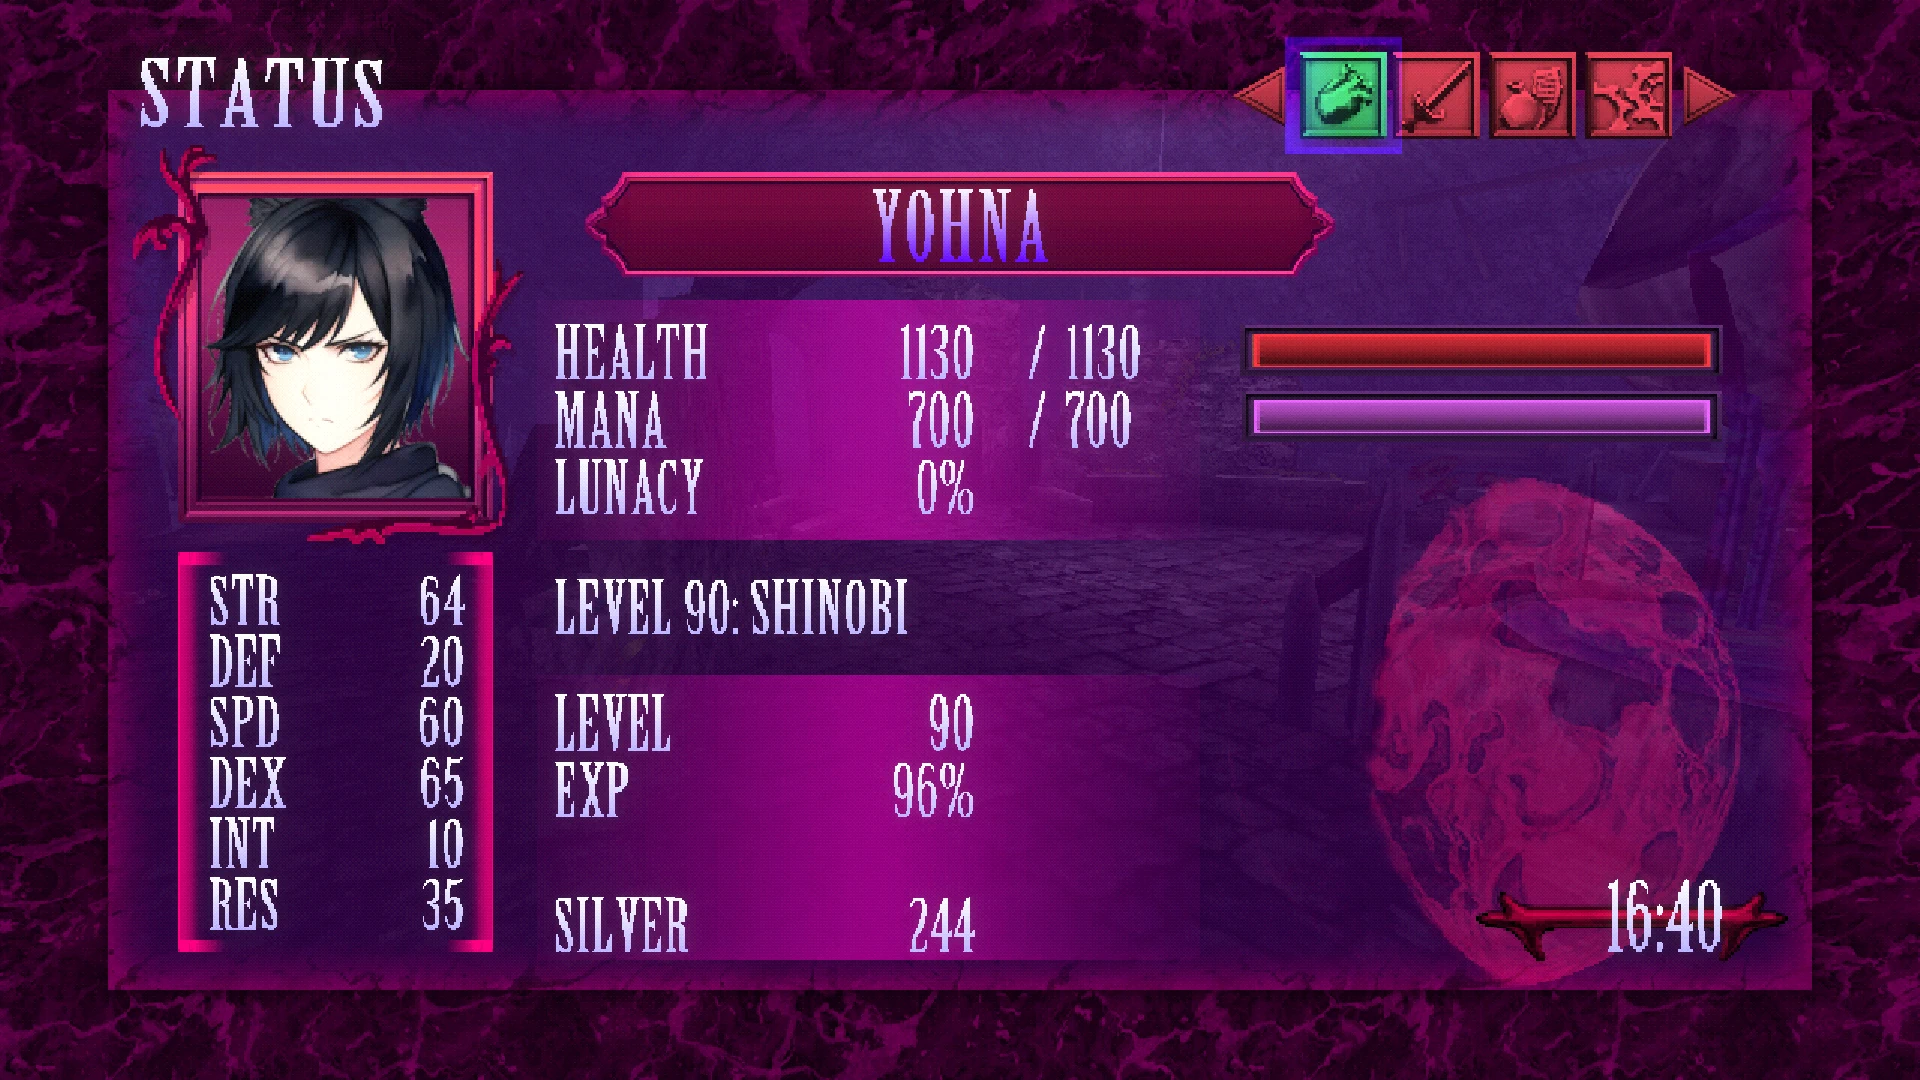 An image of the Lunacid status screen showing a Level 90 Shinobi named Yohna.